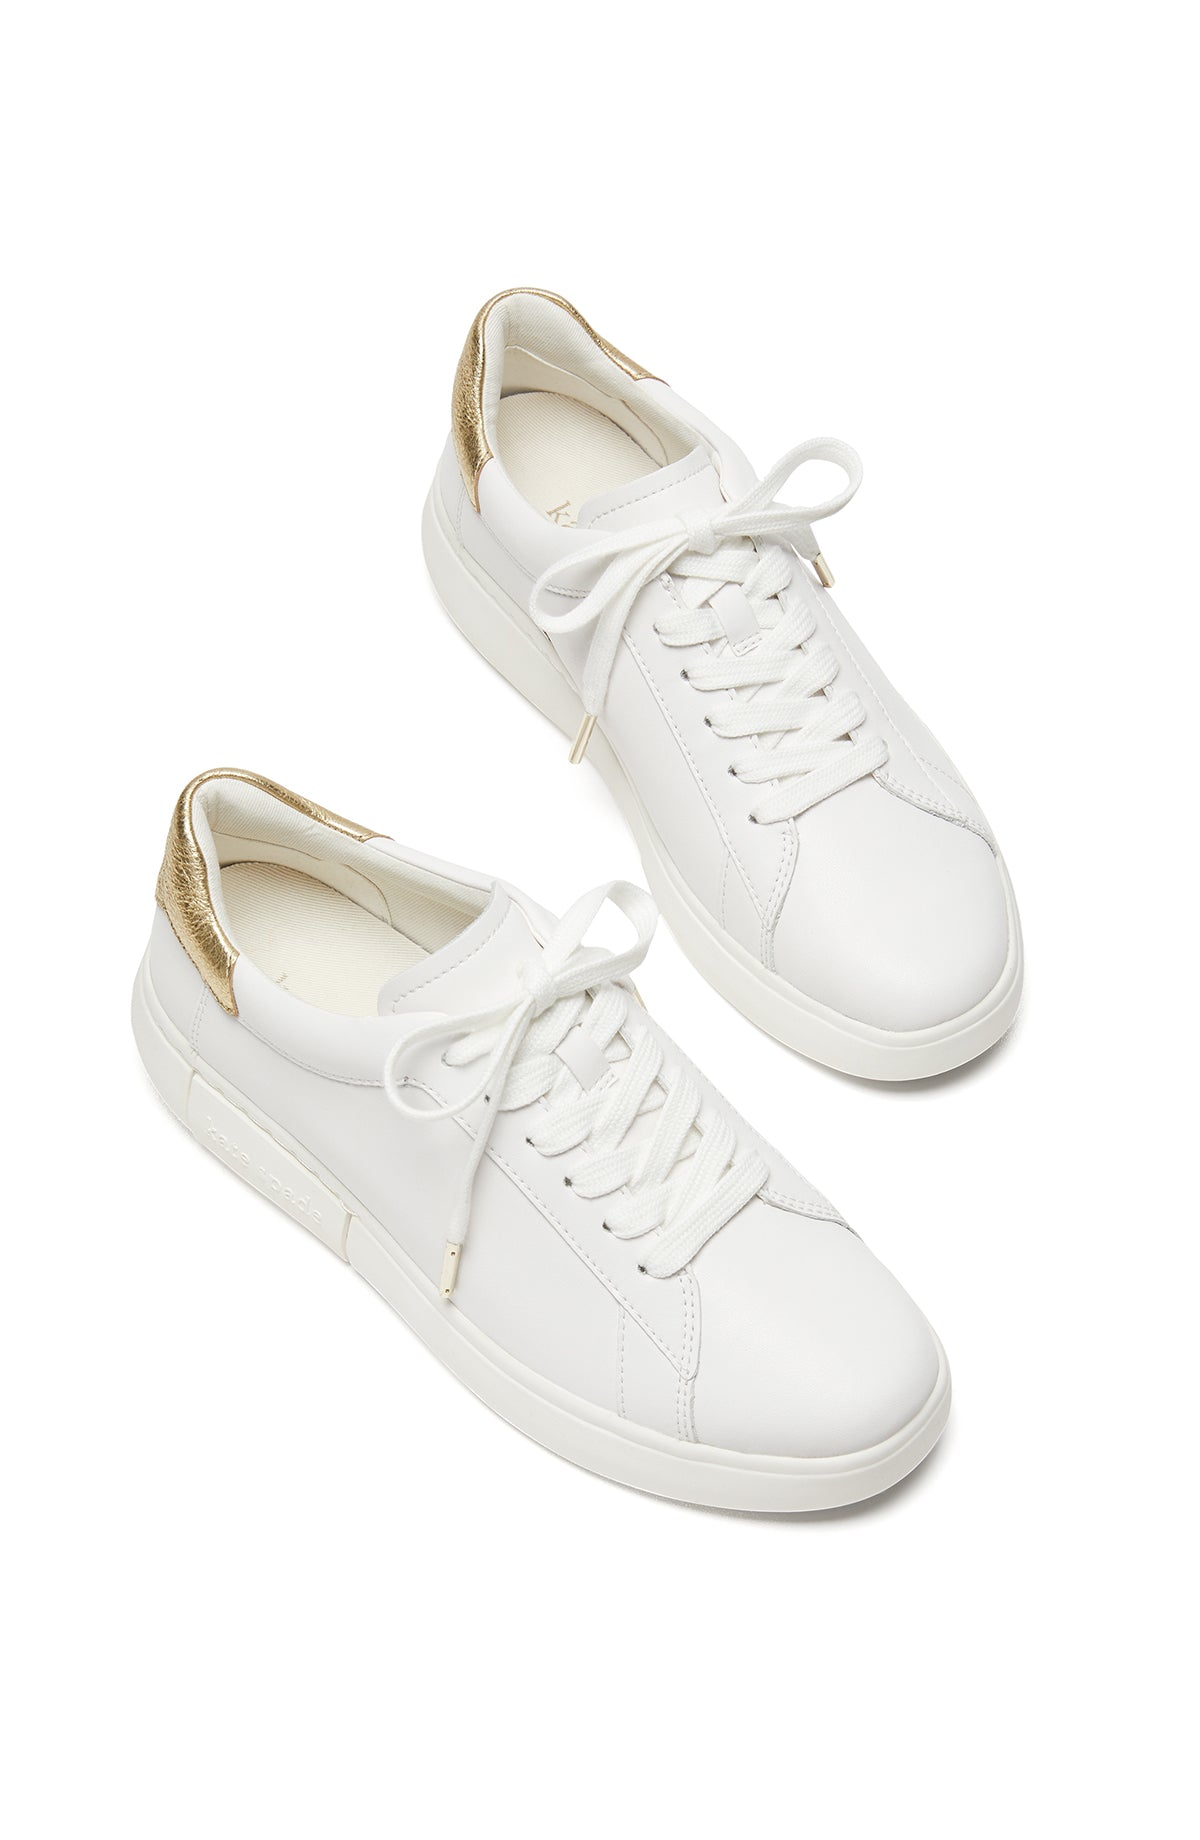 K0023-lift sneakers-Optic White/Pale Gol